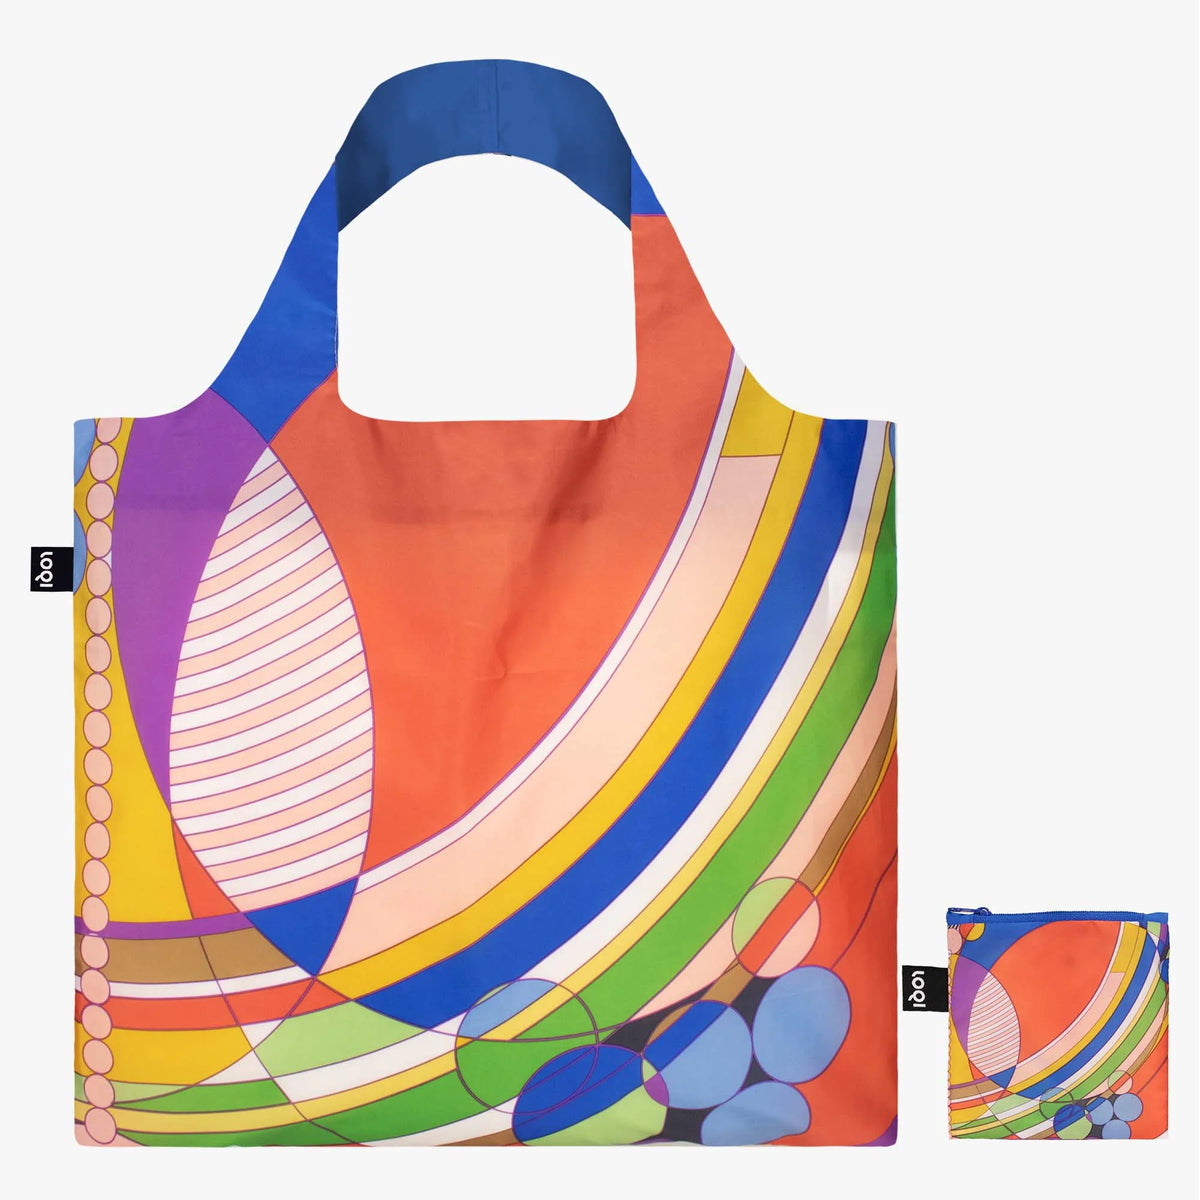 New HENRI LLOYD Compact Shoulder Bag Candy White | eBay